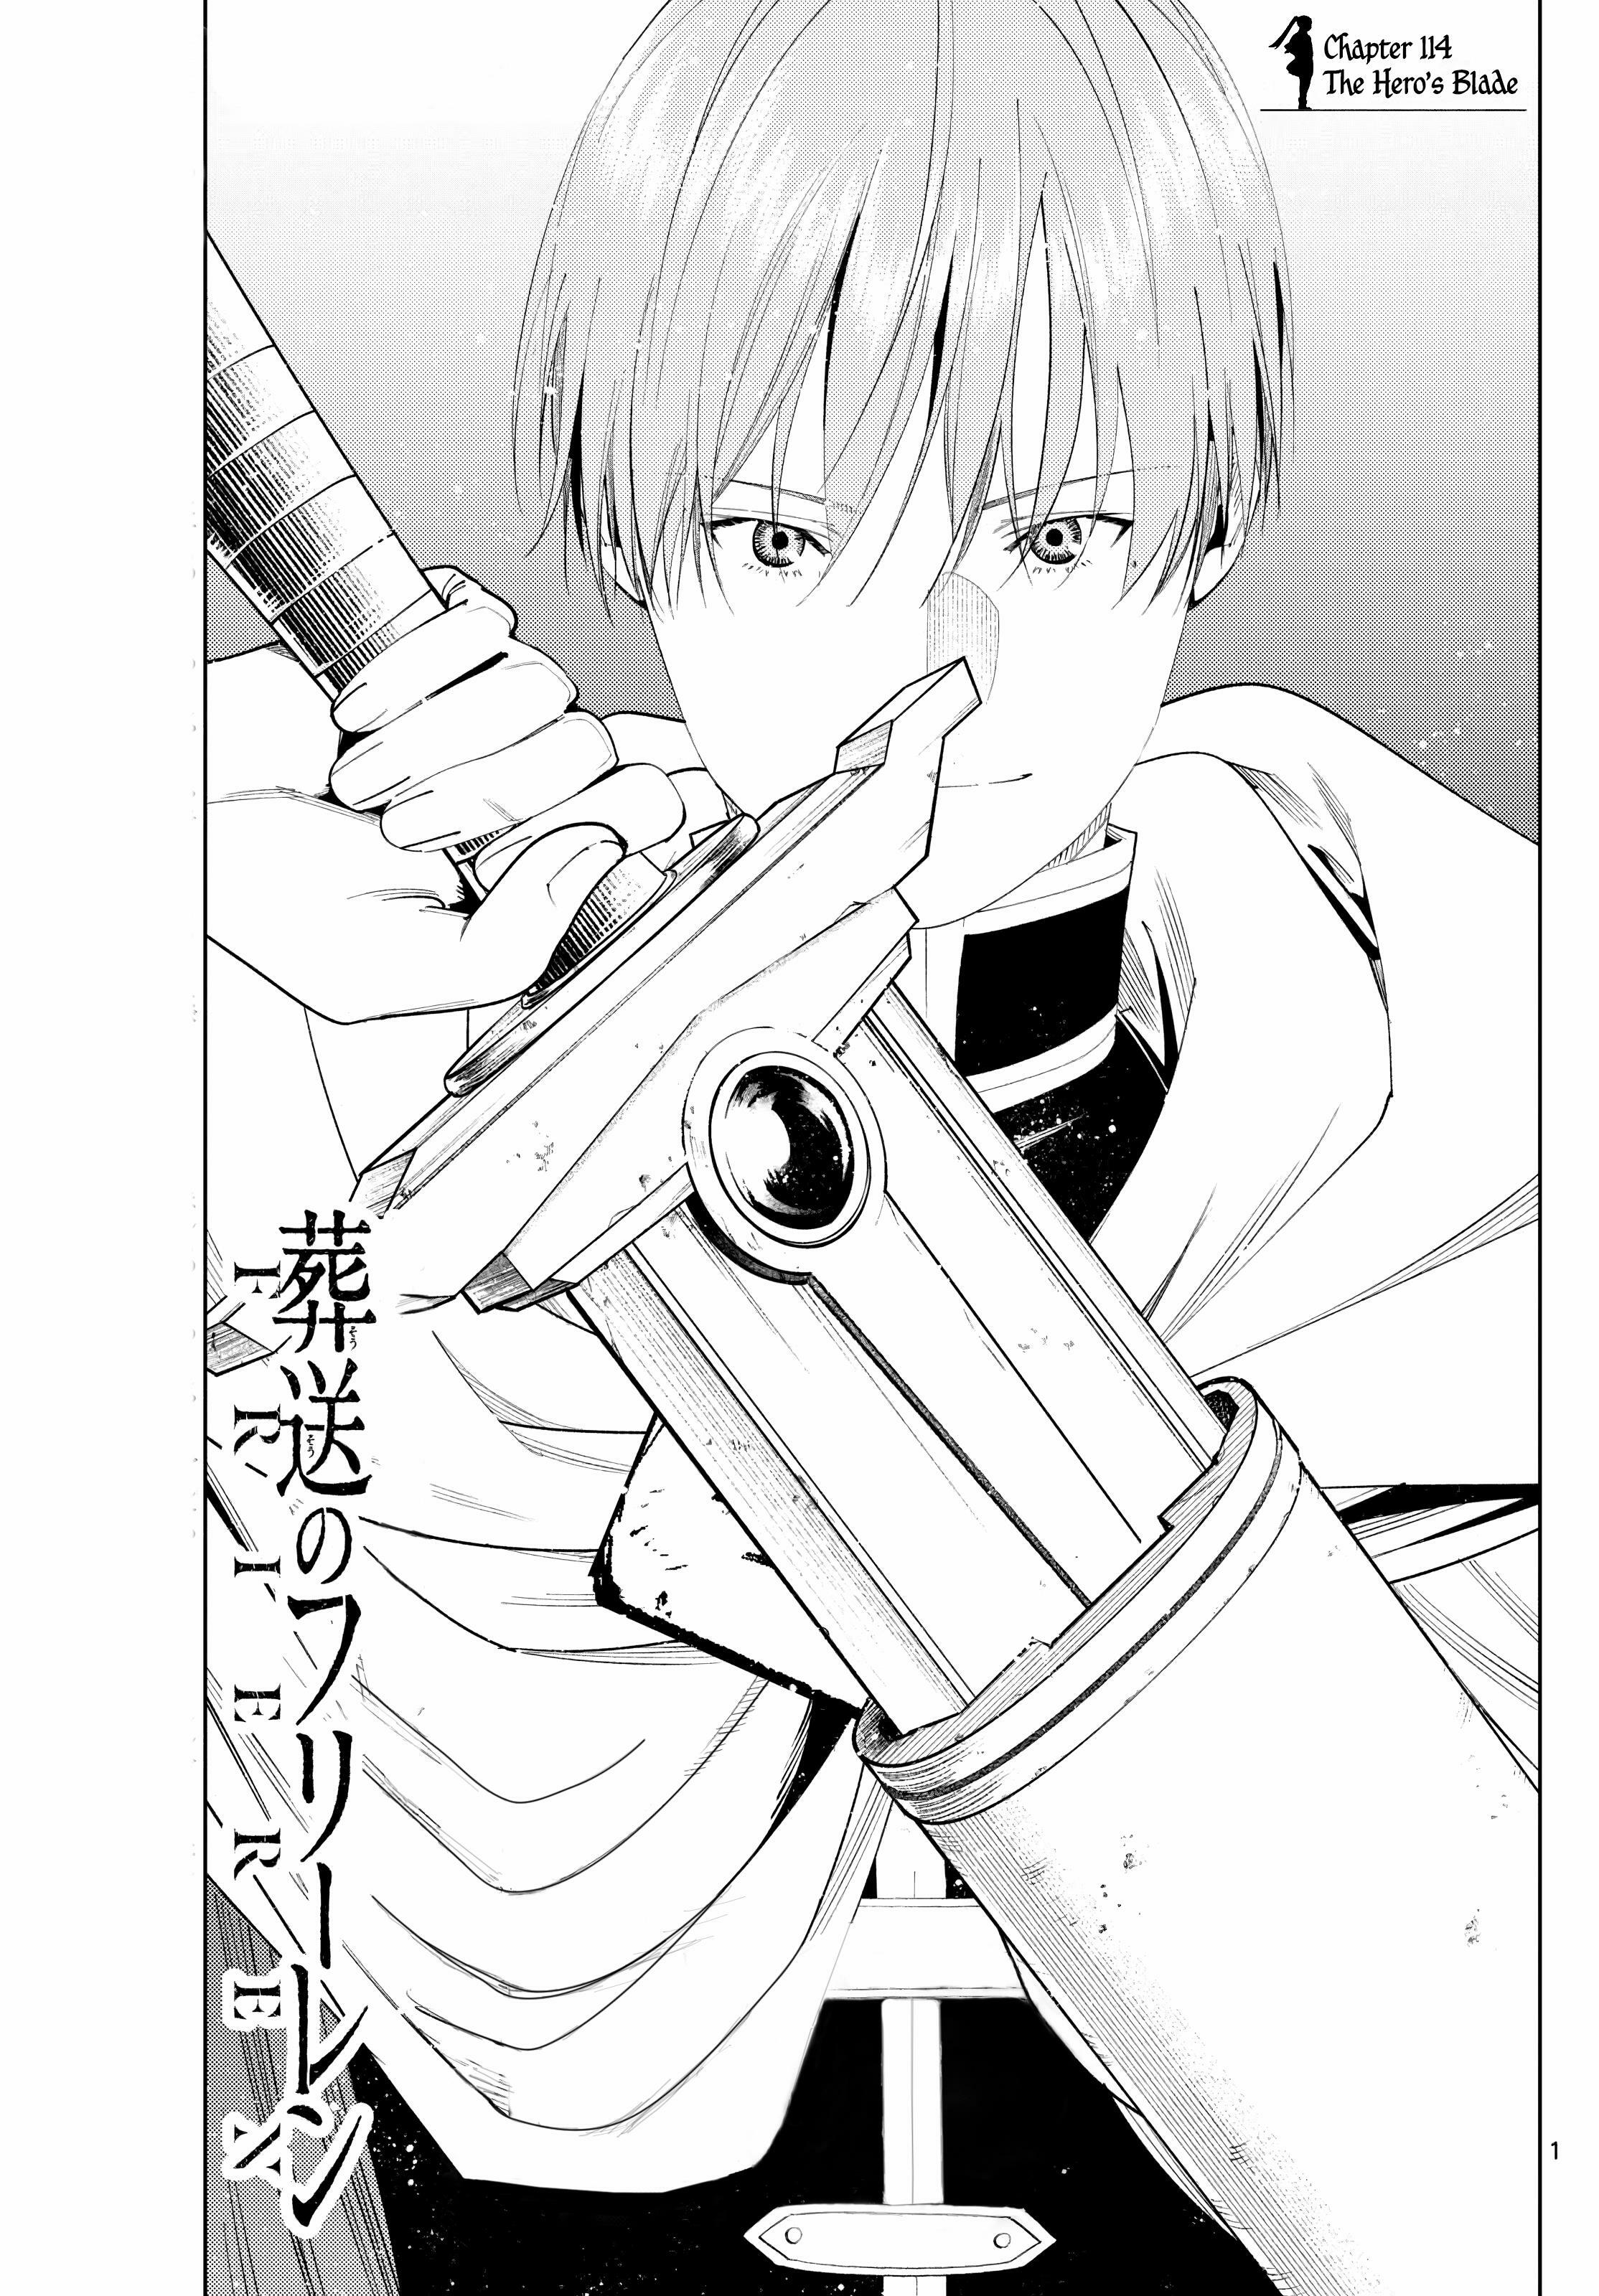 Sousou No Frieren Chapter 114: The Hero's Blade page 1 - Mangakakalot